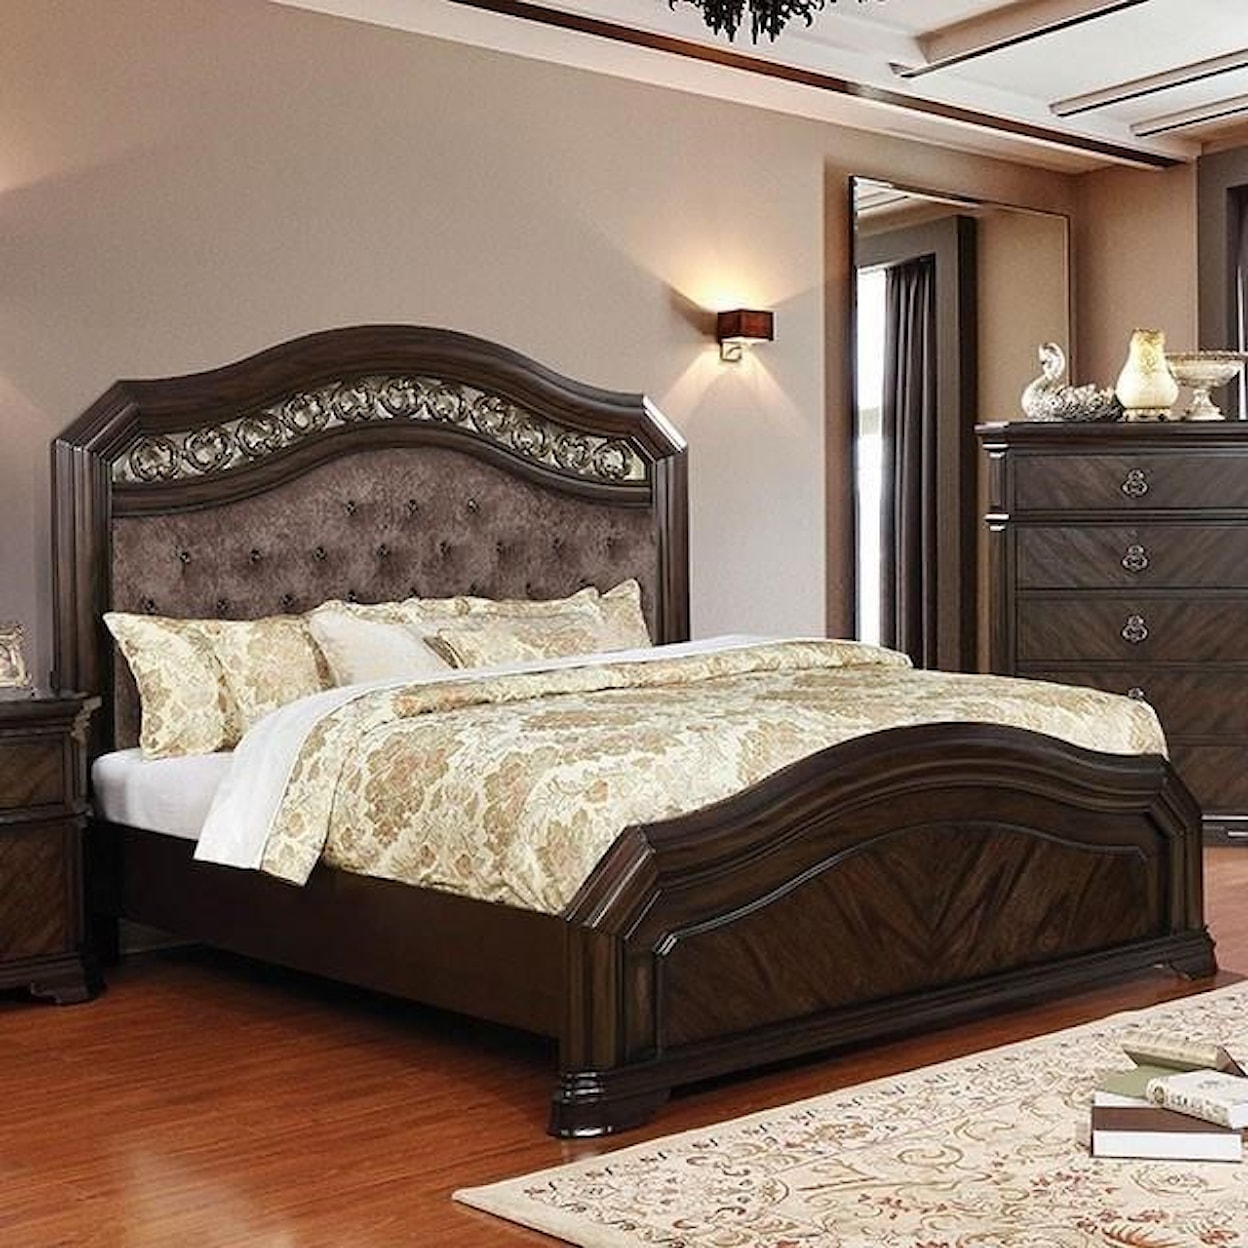 Furniture of America Calliope Queen Bed